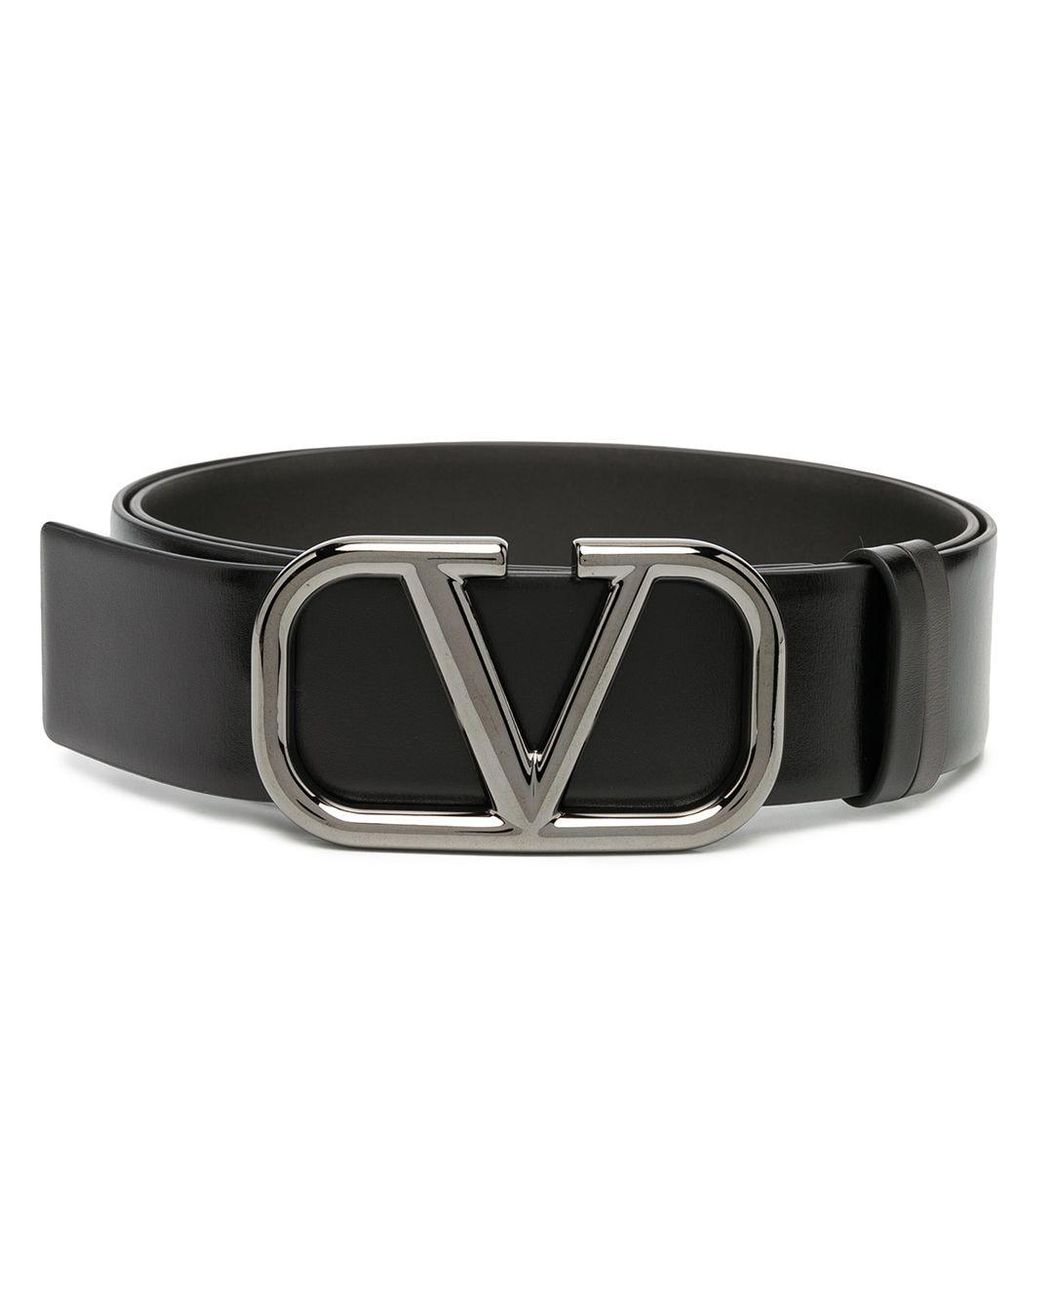 Valentino Vlogo Leather Belt in Black for Men - Lyst